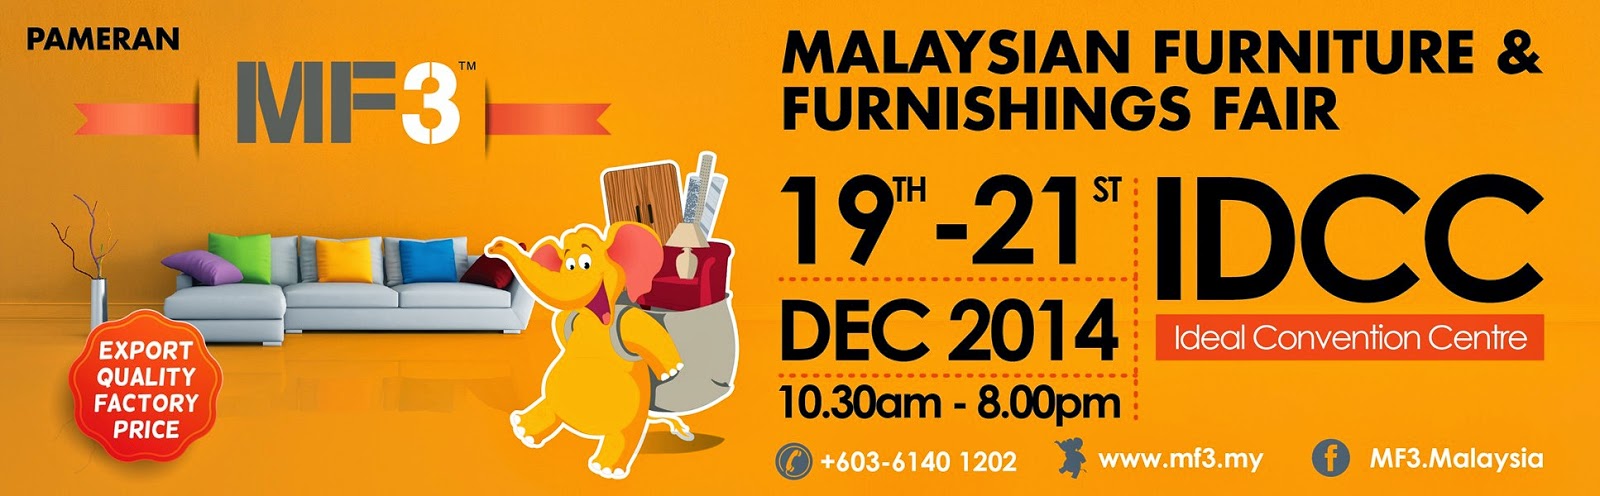 MF3 Malaysia Furniture & Furnishing Fair 2014 @Ideal Convention Centre Shah Alam